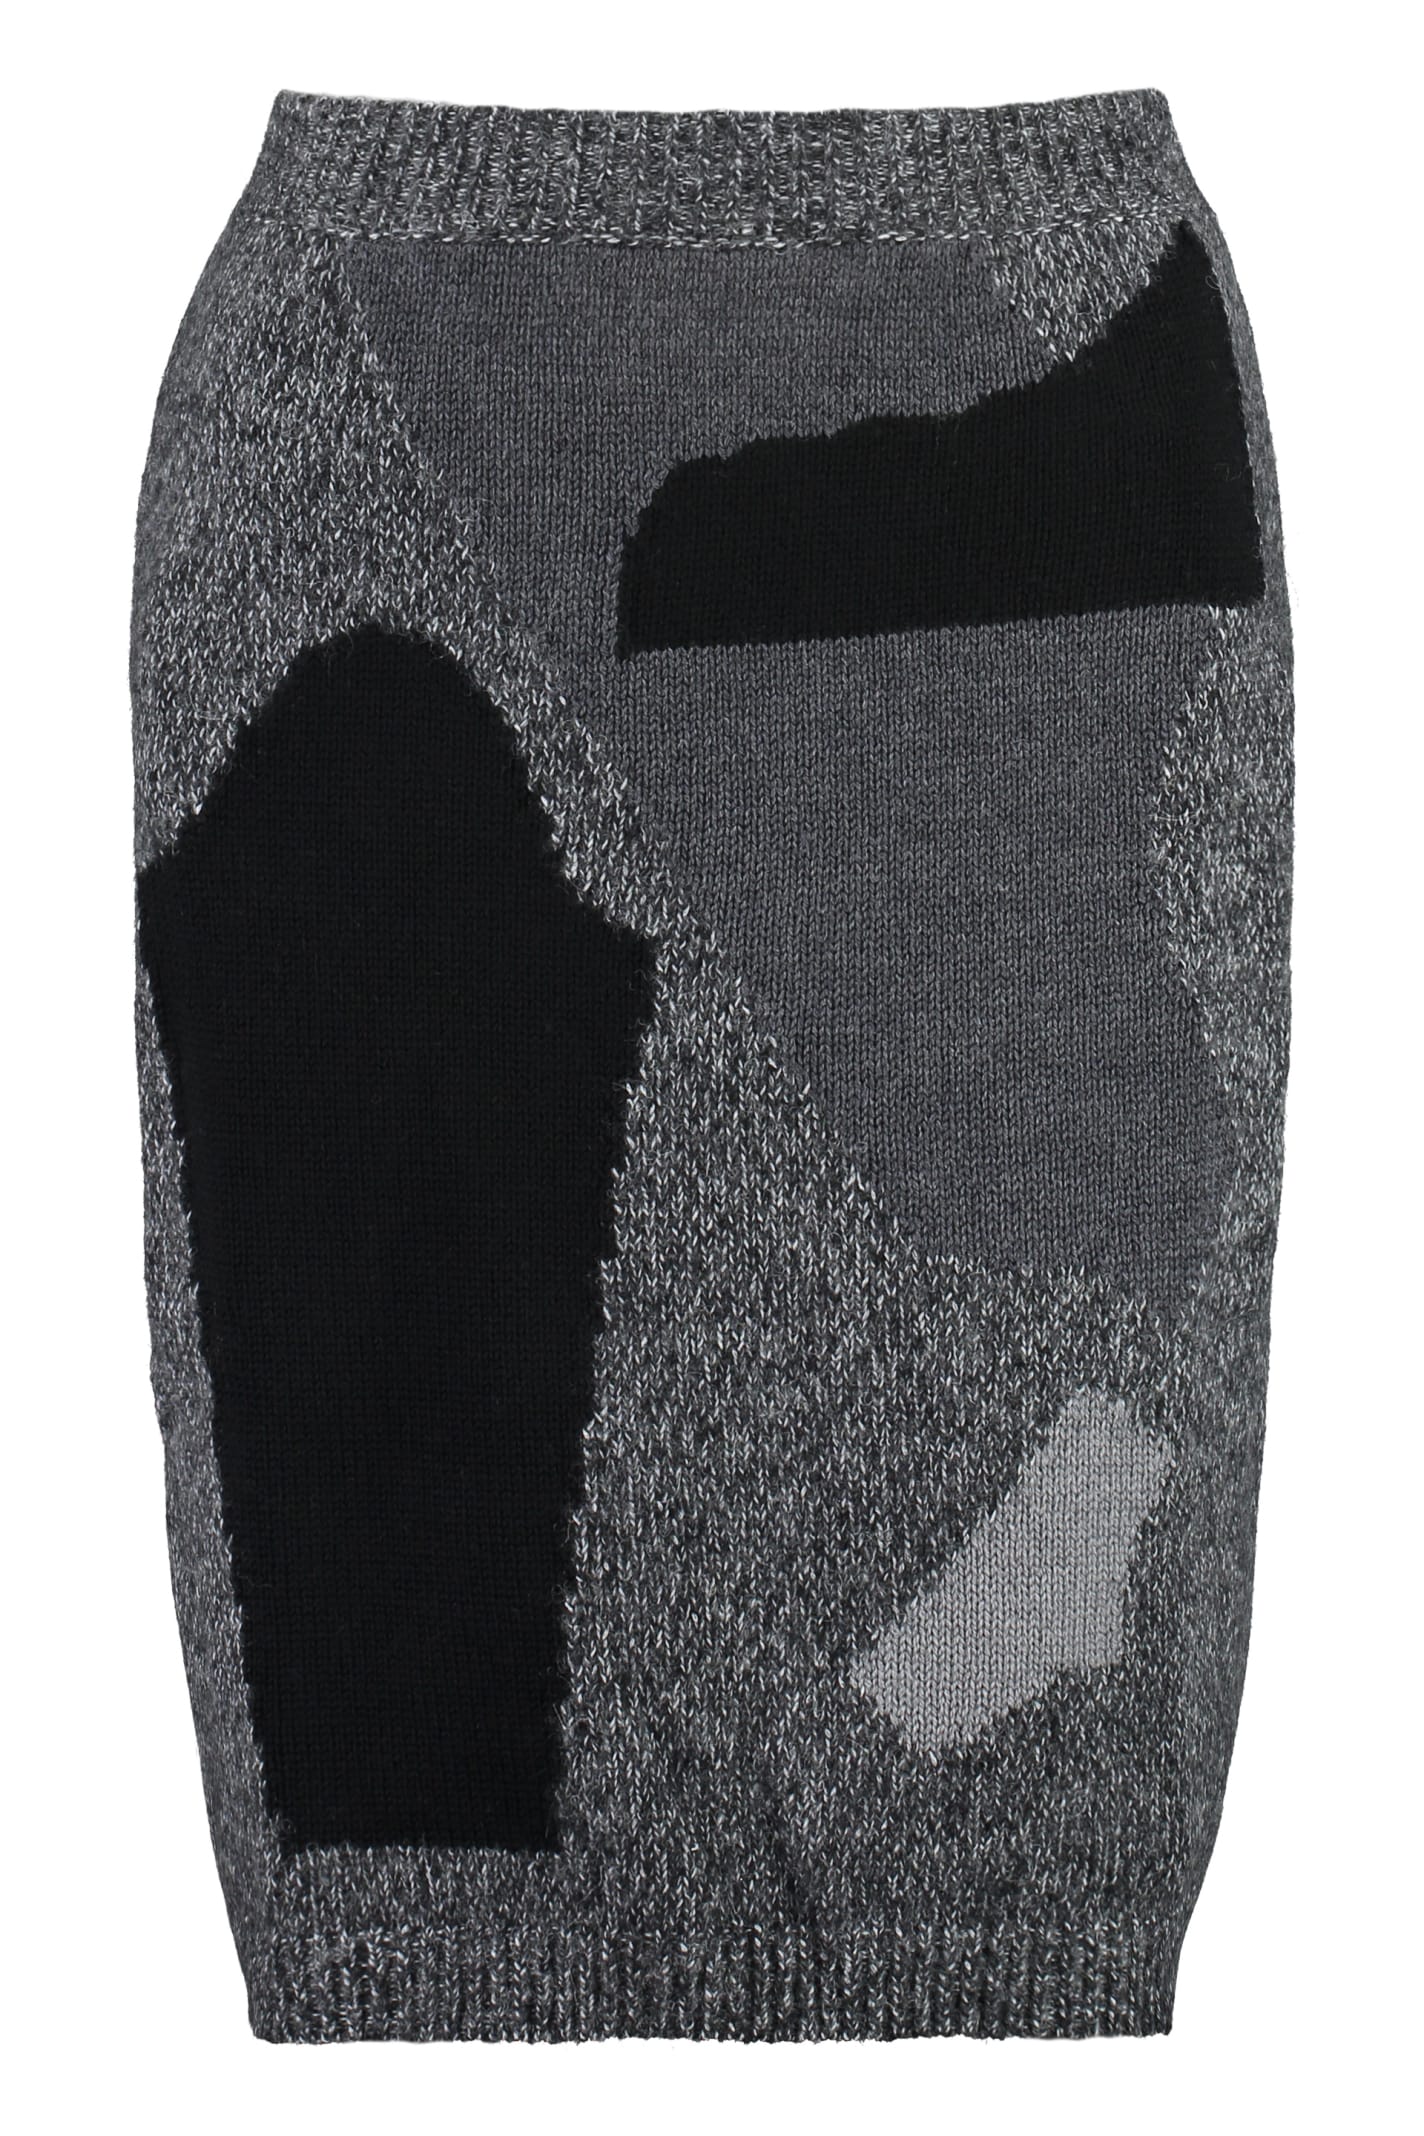 Moschino Knit Skirt In Grey